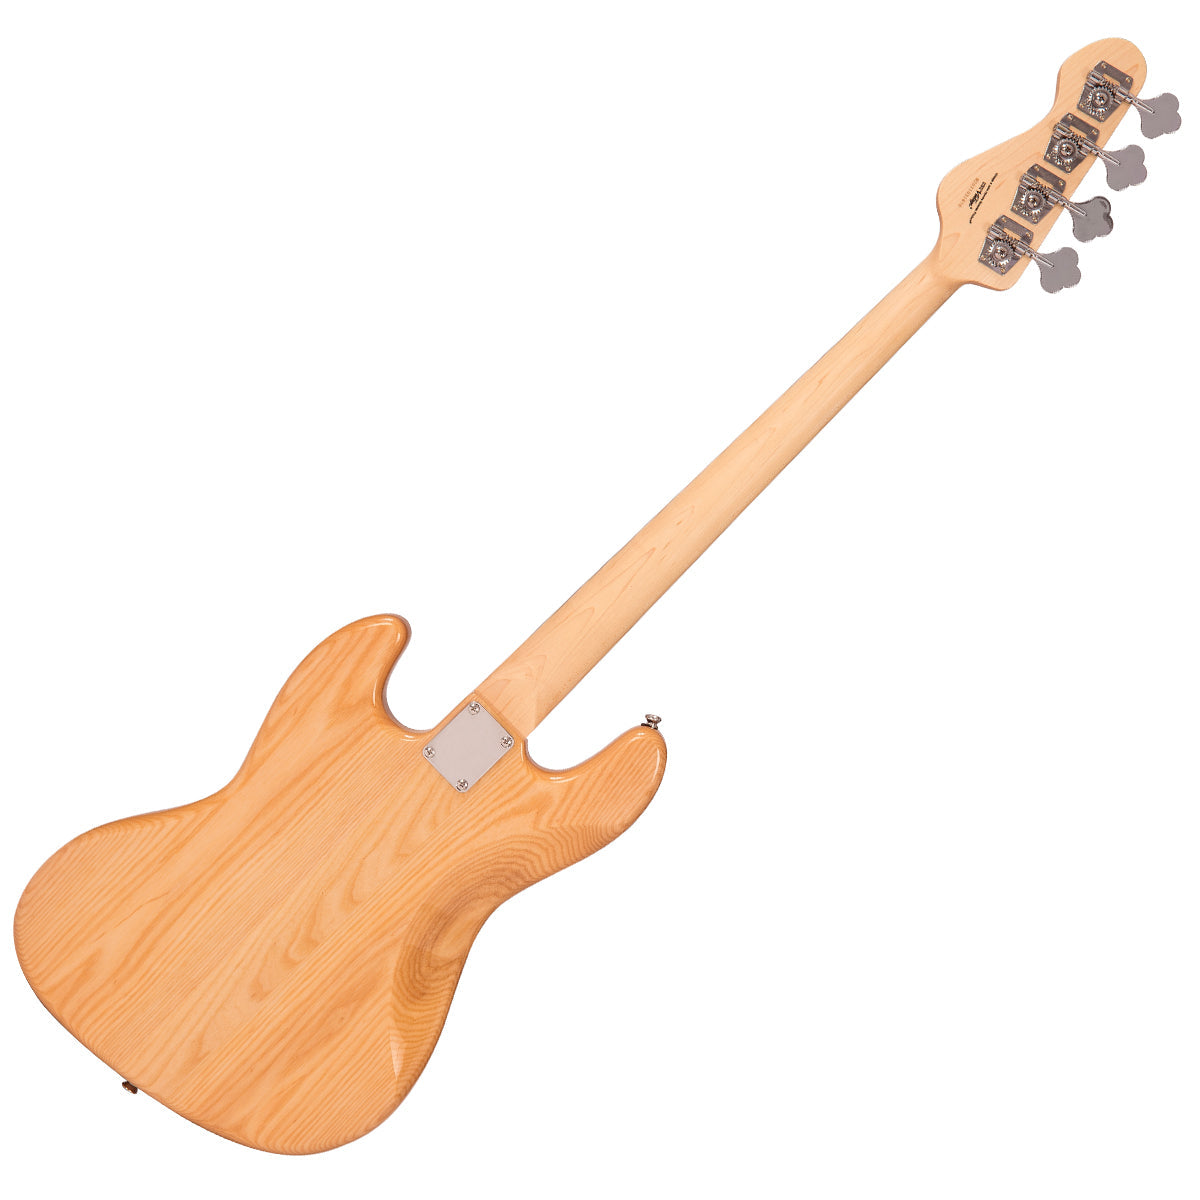 Vintage VJ74 ReIssued Maple Fingerboard Bass ~ Natural Ash, Electric Basses for sale at Richards Guitars.